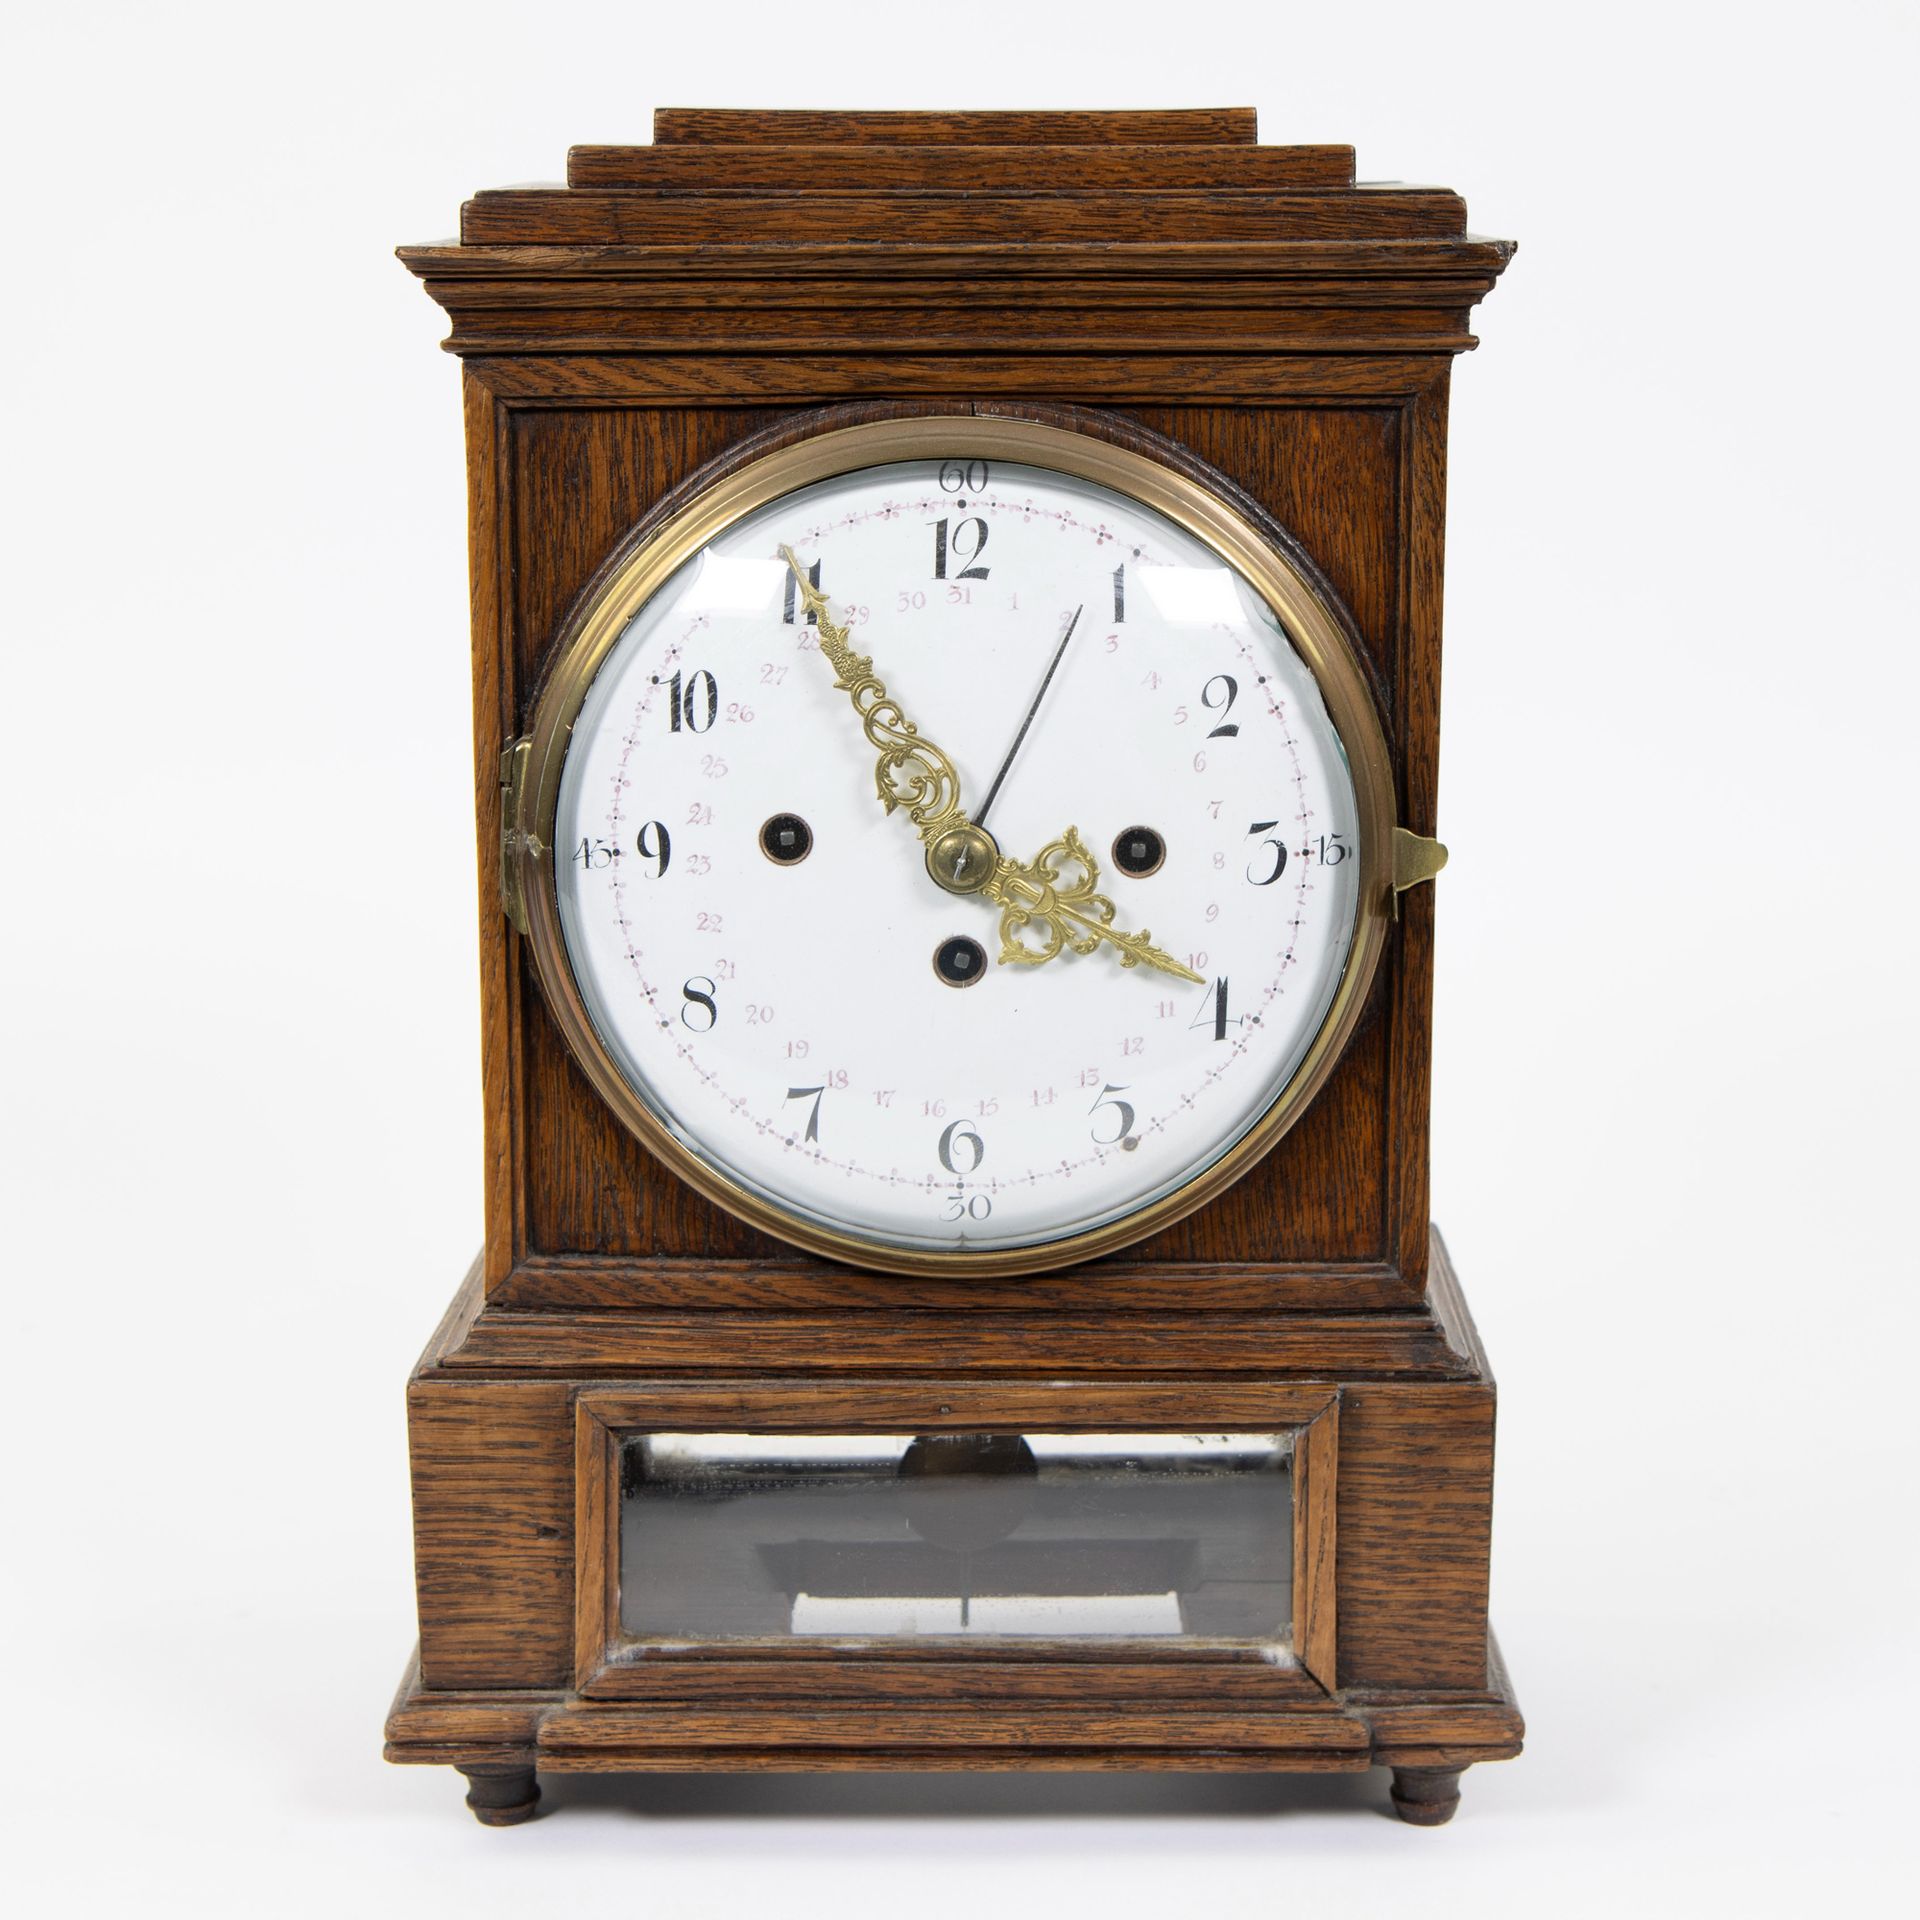 Null German clock in oak case signed Johan Nepohnic Vogel in Göggingen
Duitse kl&hellip;